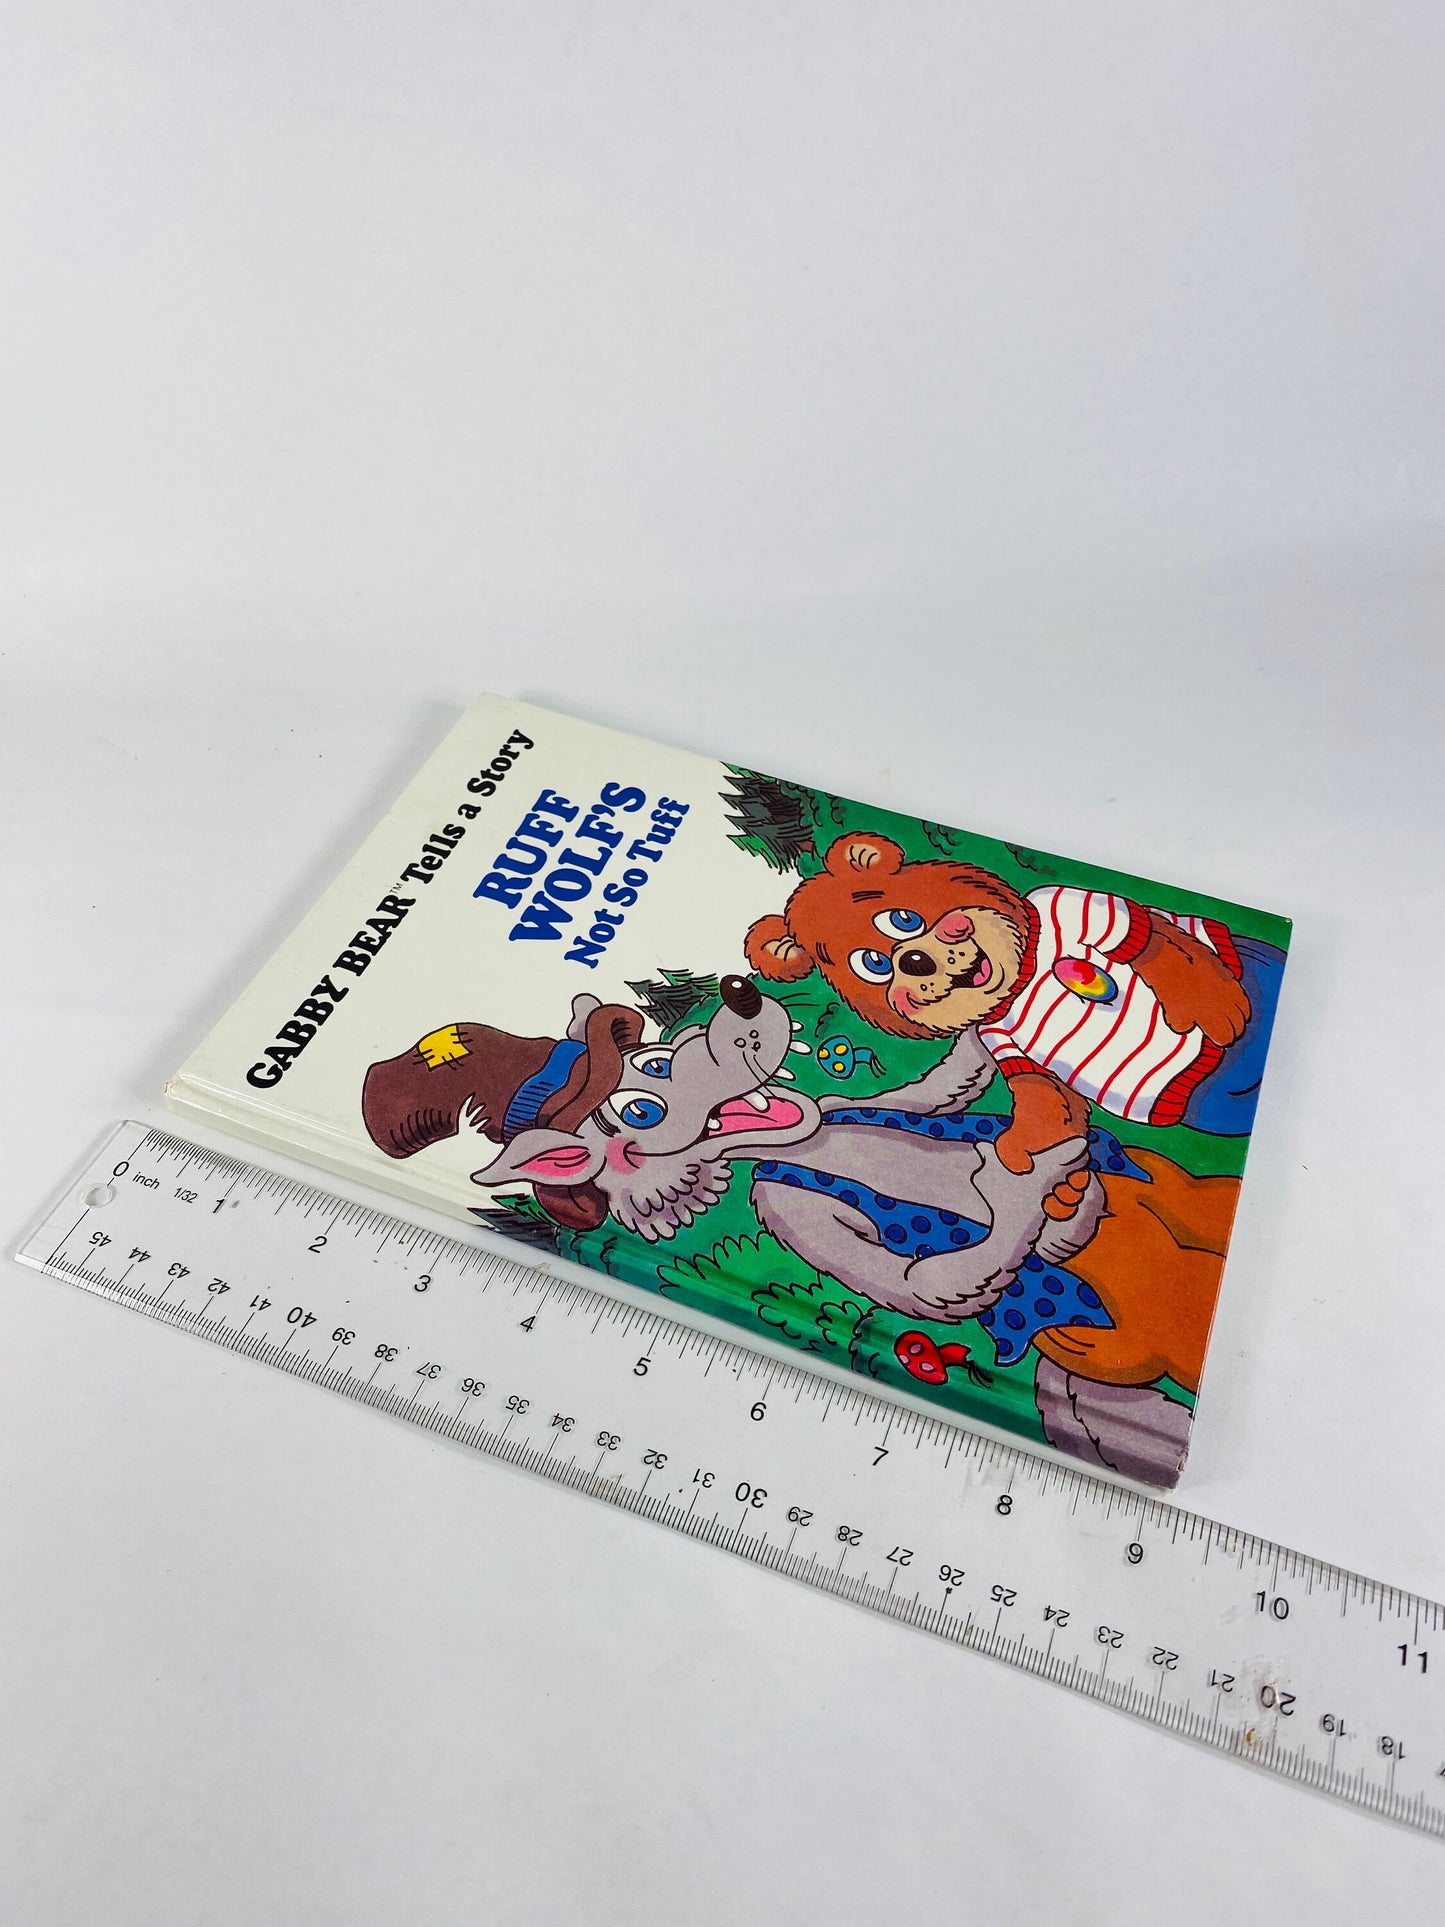 Gabby Bear Tells a Story. Ruff Wolff's Not So Tough by Glen Olson & Rod Baker circa 1979. First Edition! Book lover gift. Children's story